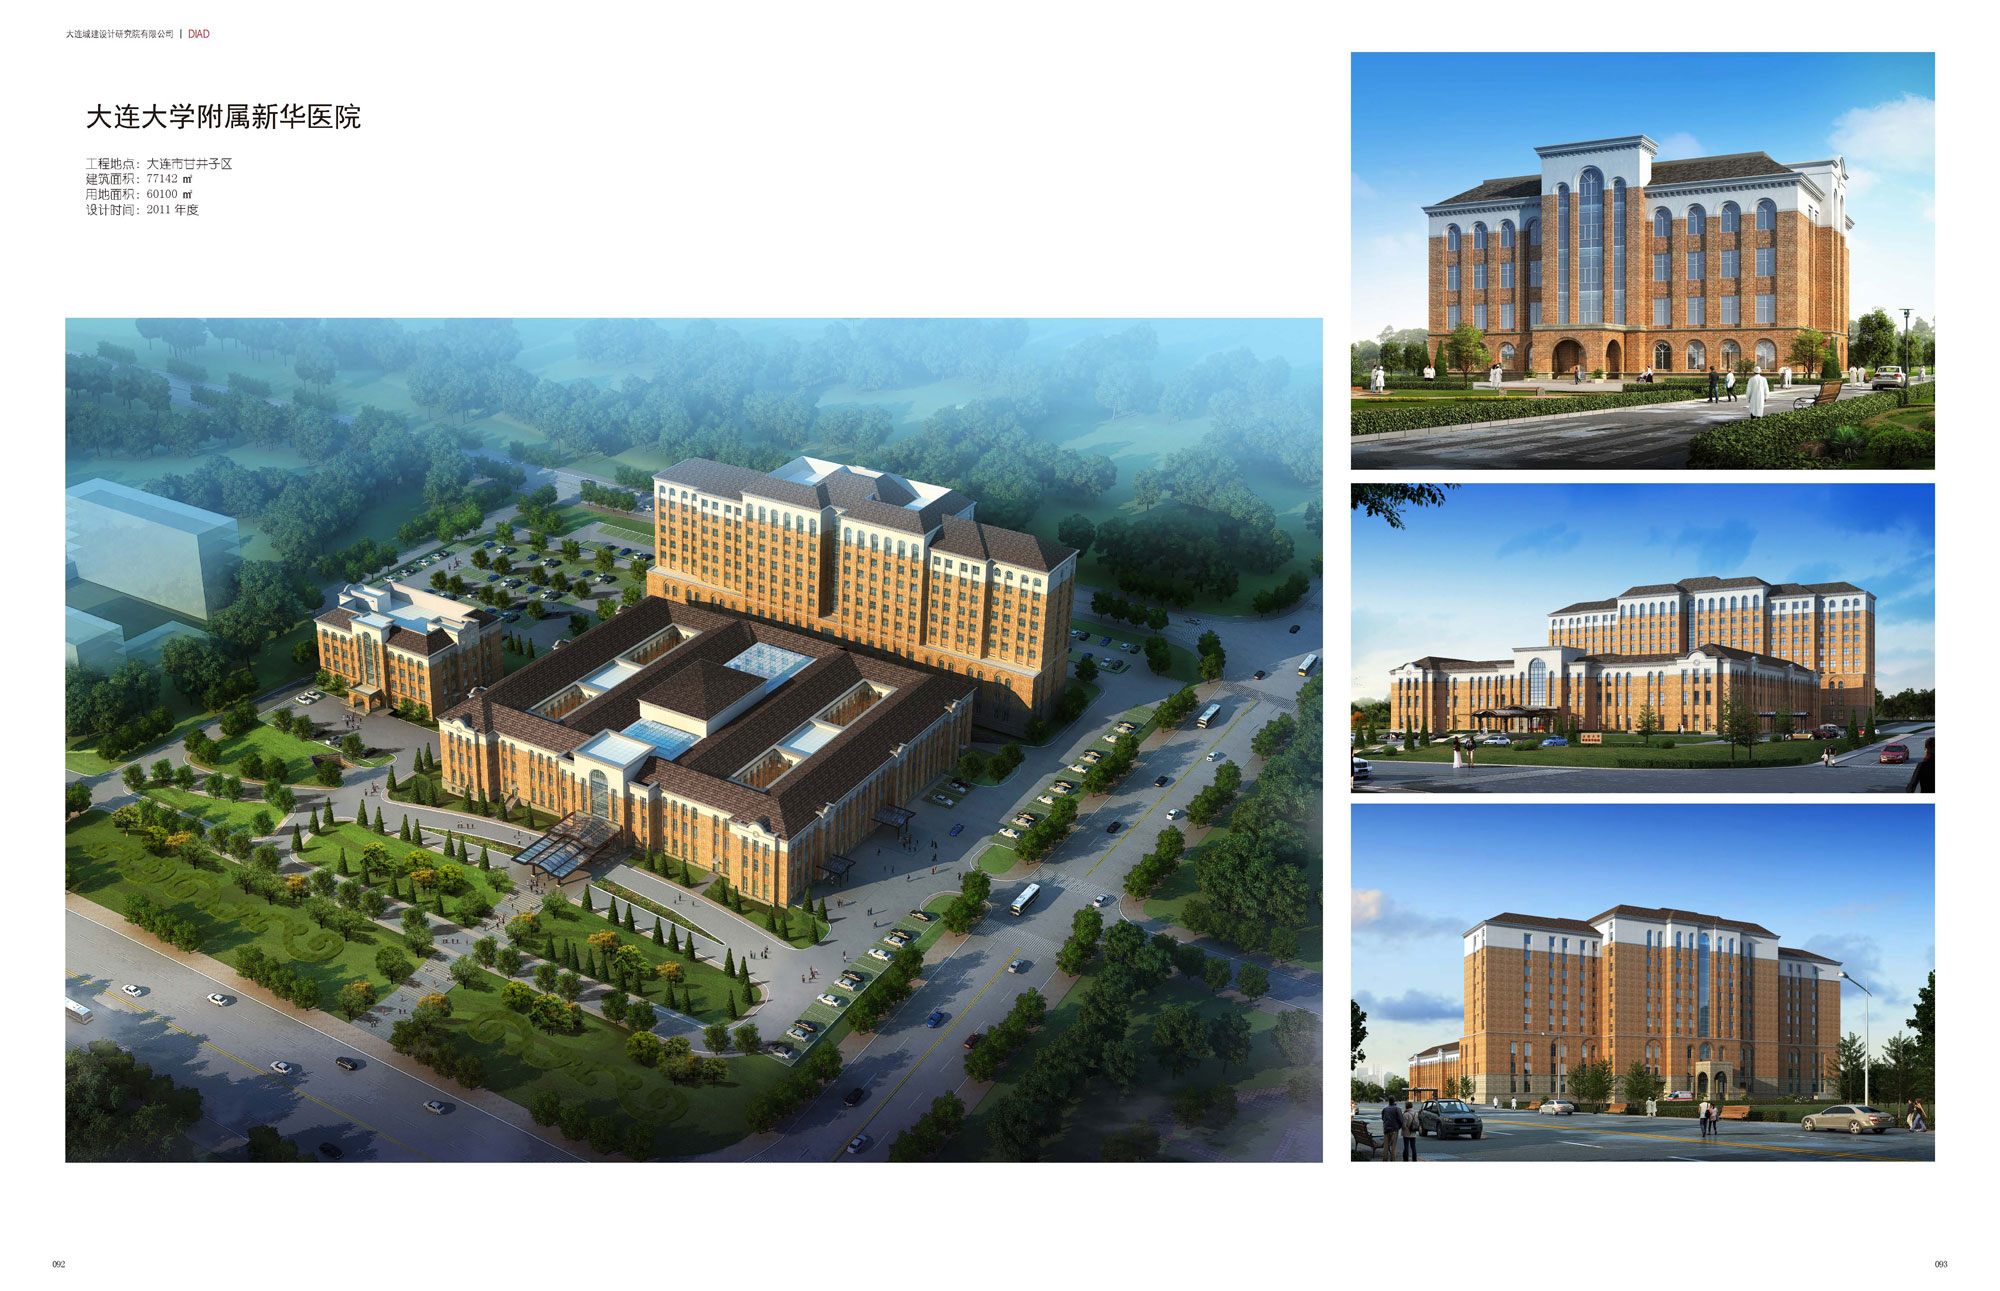 Dalian University Affiliated Xinhua Hospital